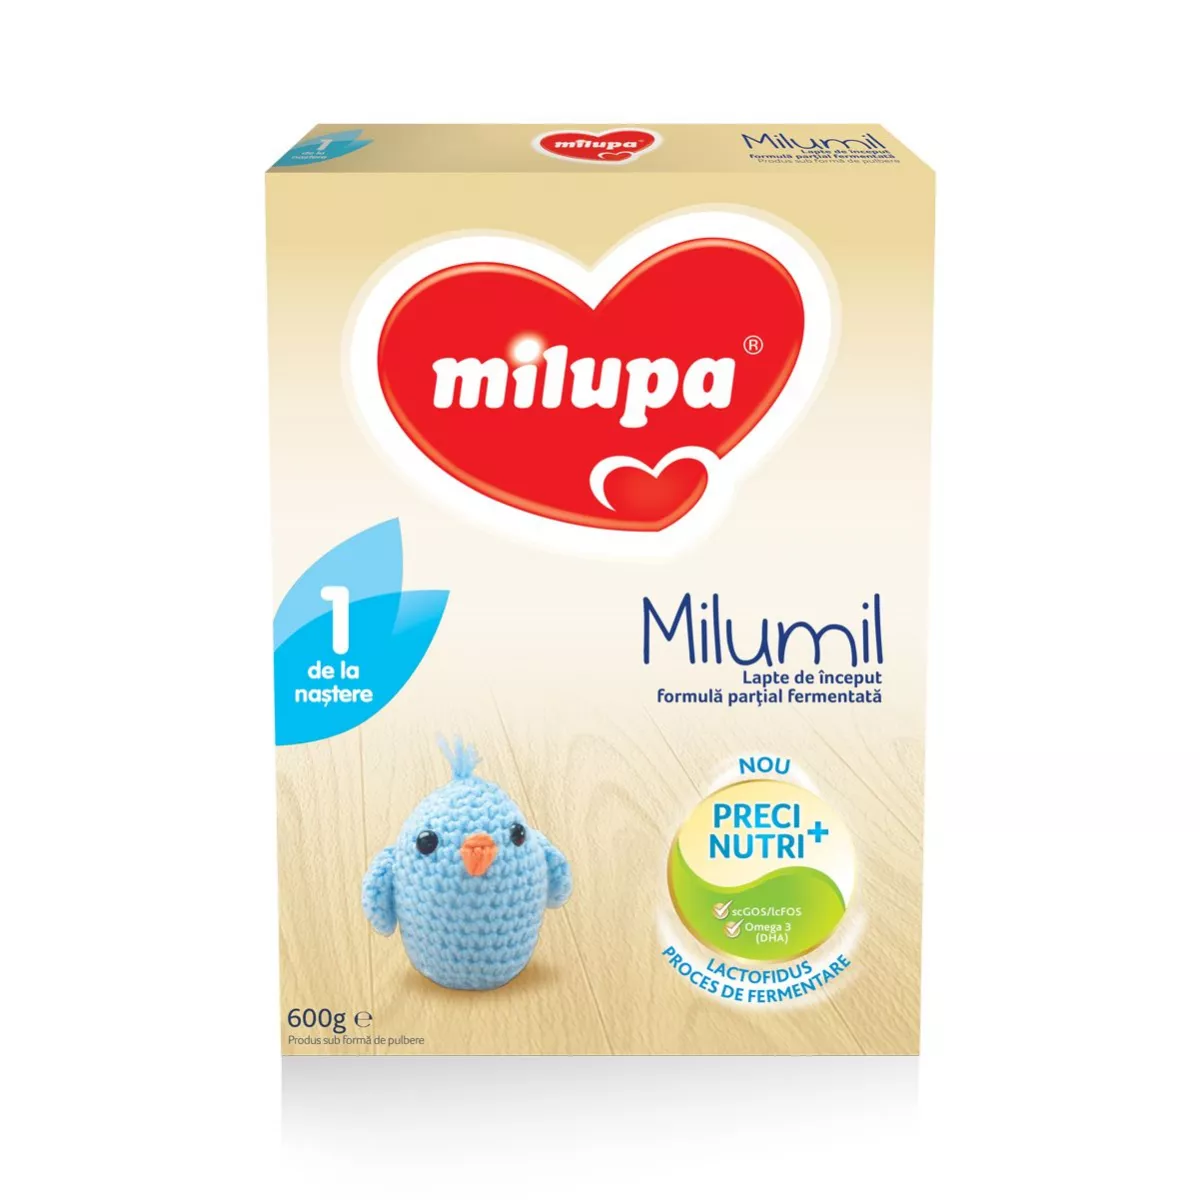 MILUPA Milumil 1 lapte, 600g, [],remediumfarm.ro